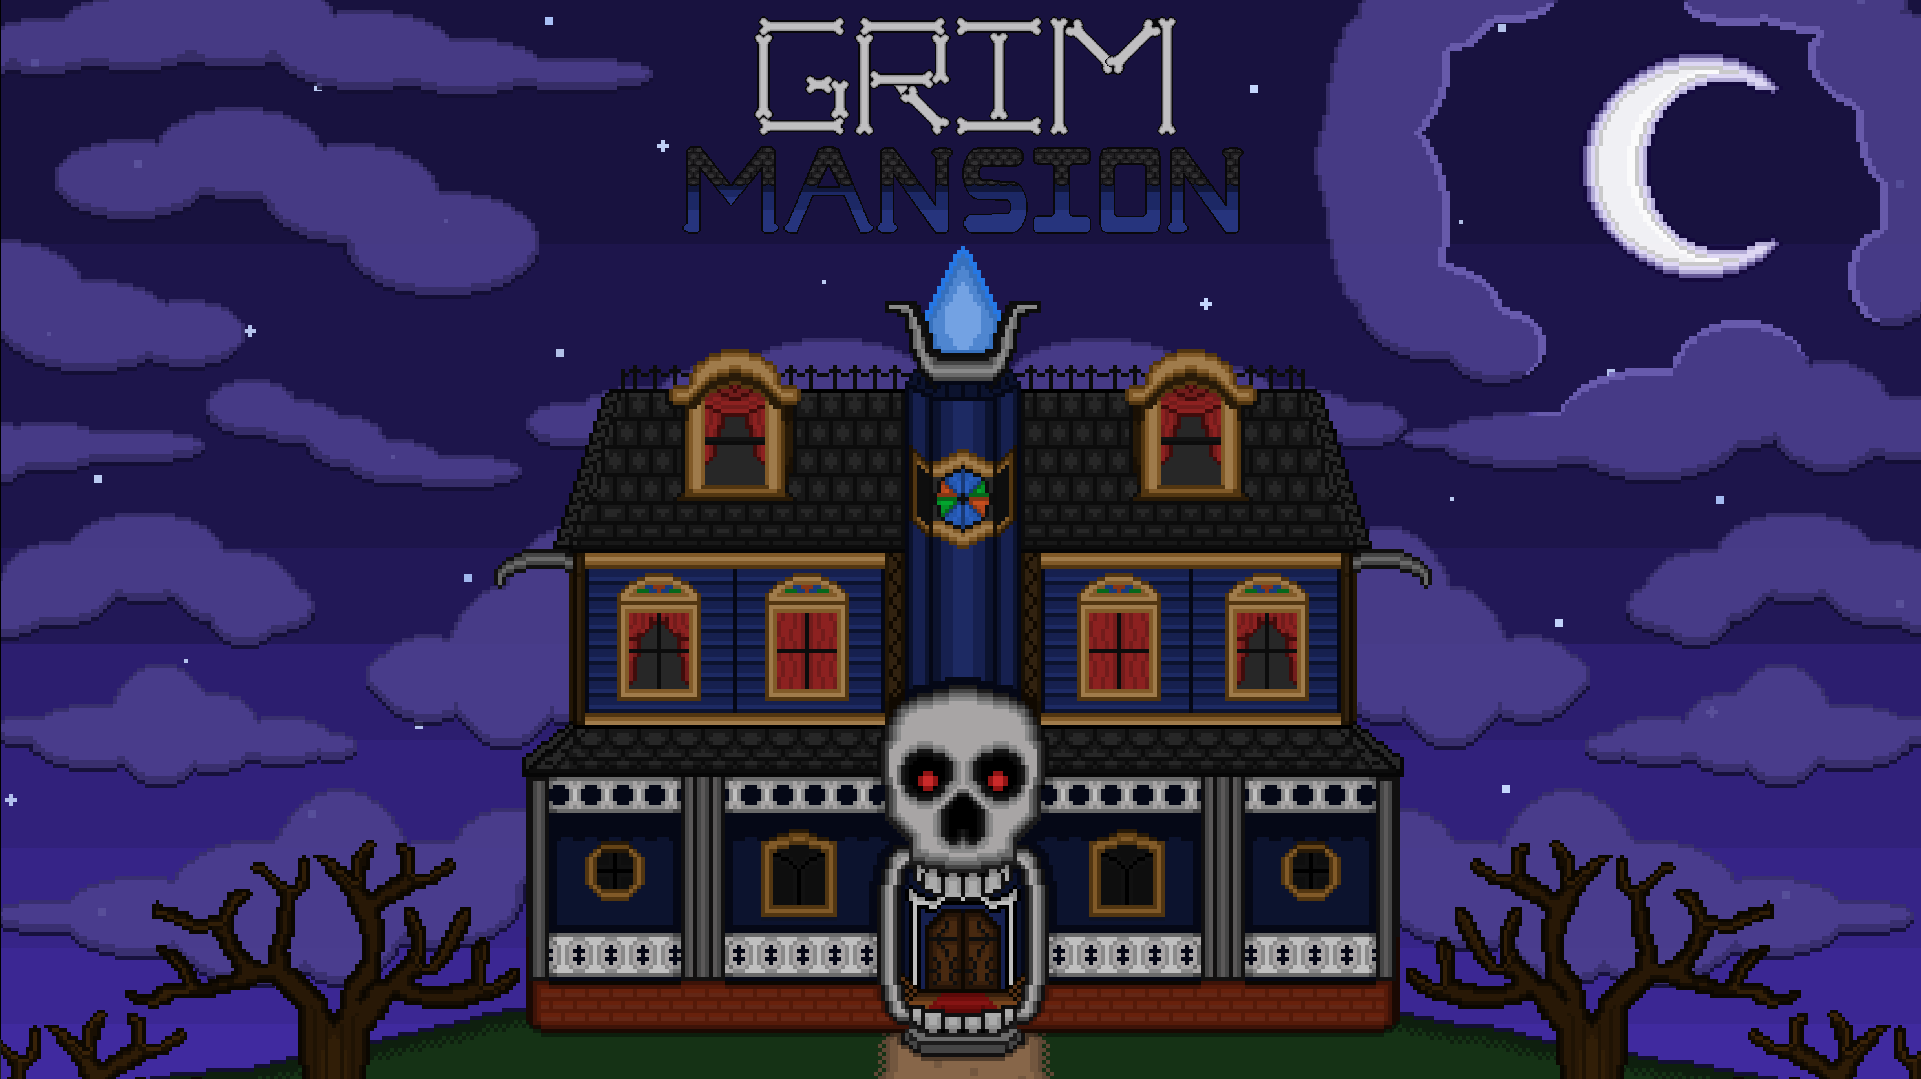 Grim Mansion